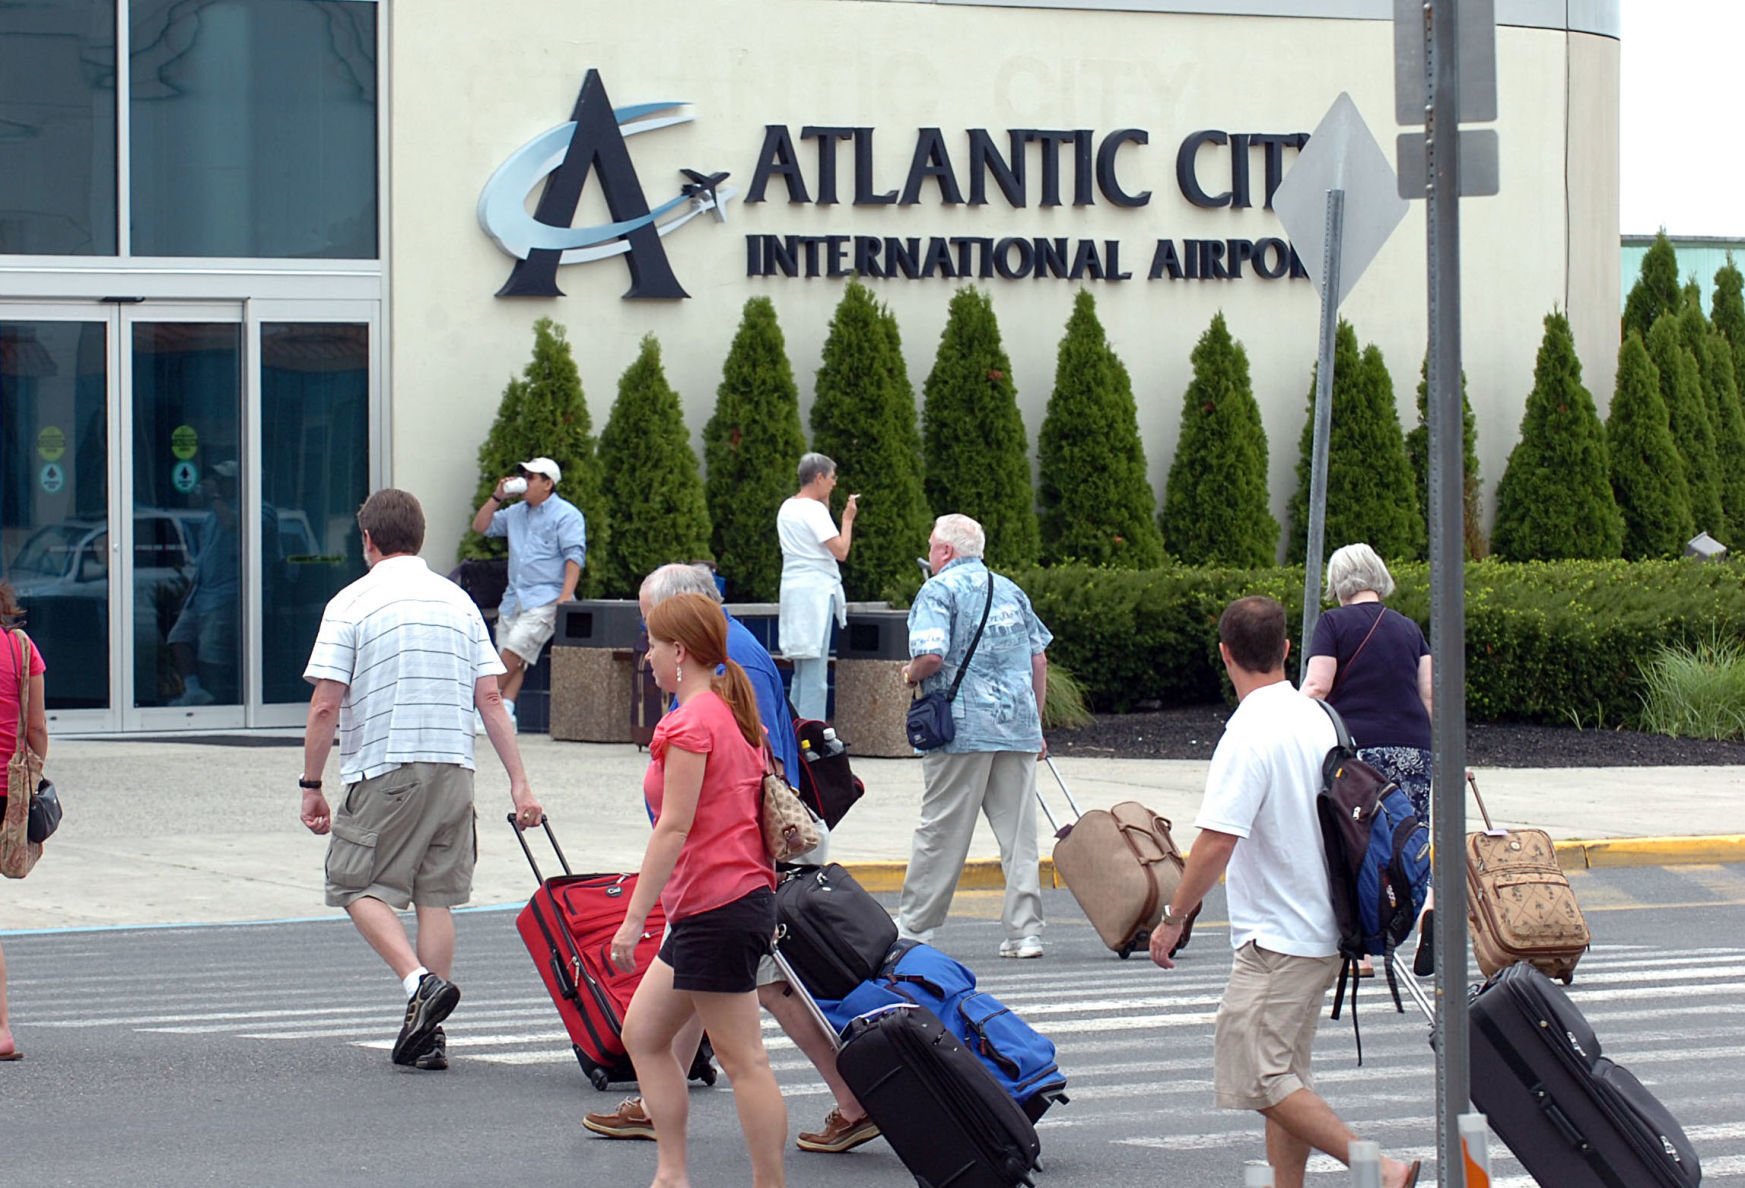 how far is atlantic city from philadelphia airport